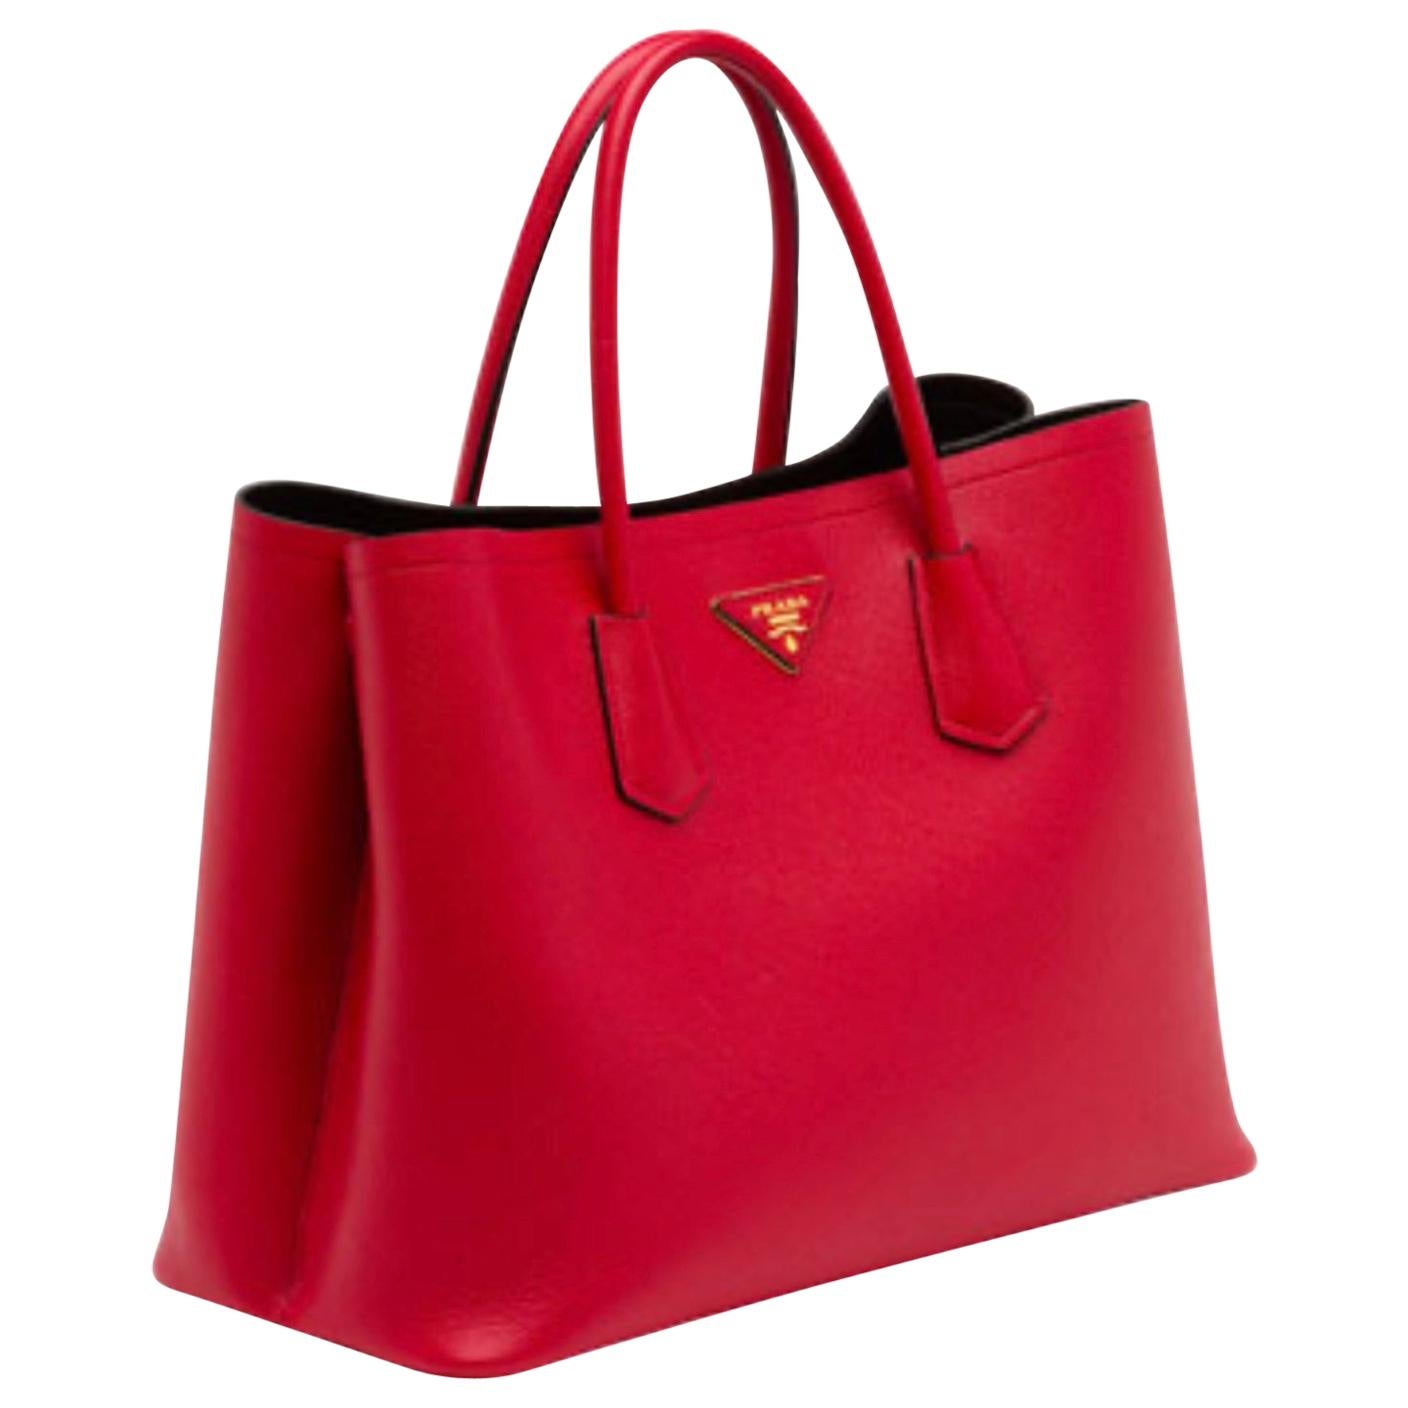 Prada Saffiano Cuir Double Bag, Red (Fuoco), Brand New